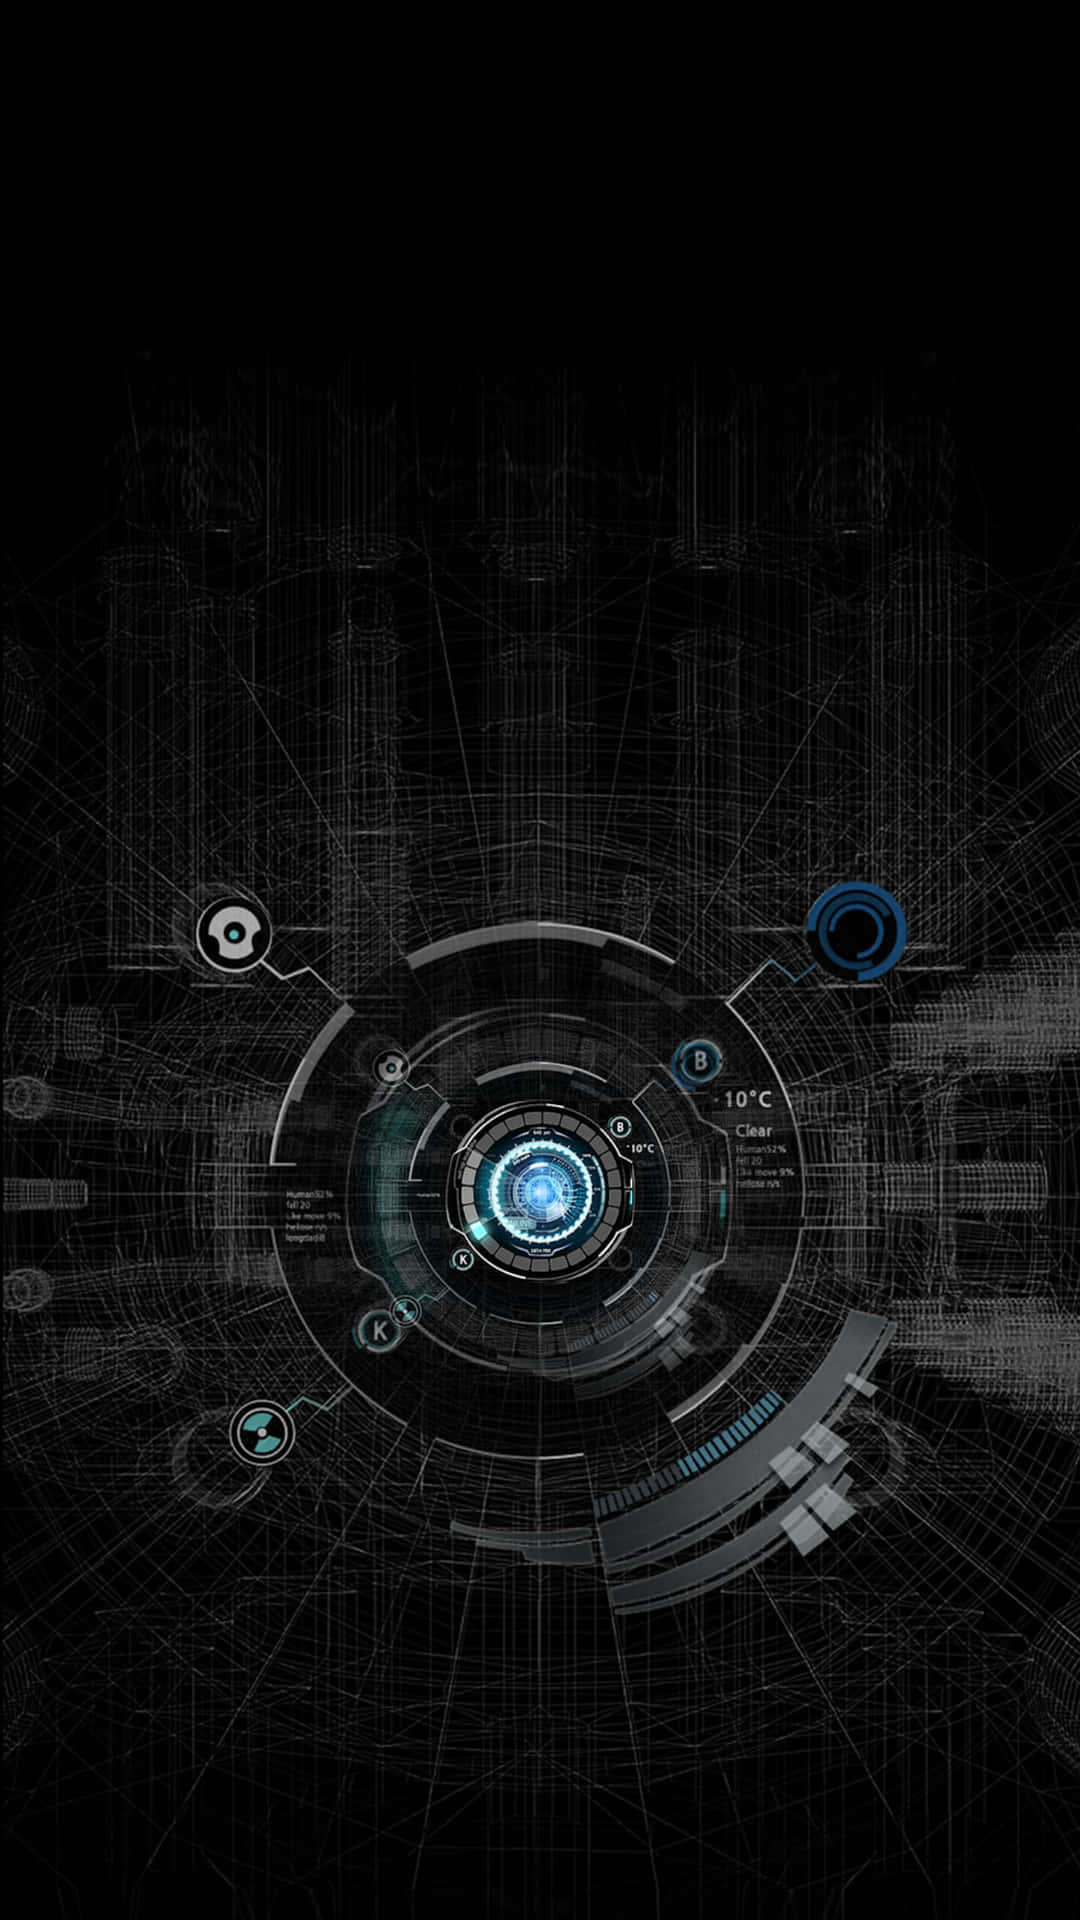 A Black Background With A Circular Design Wallpaper